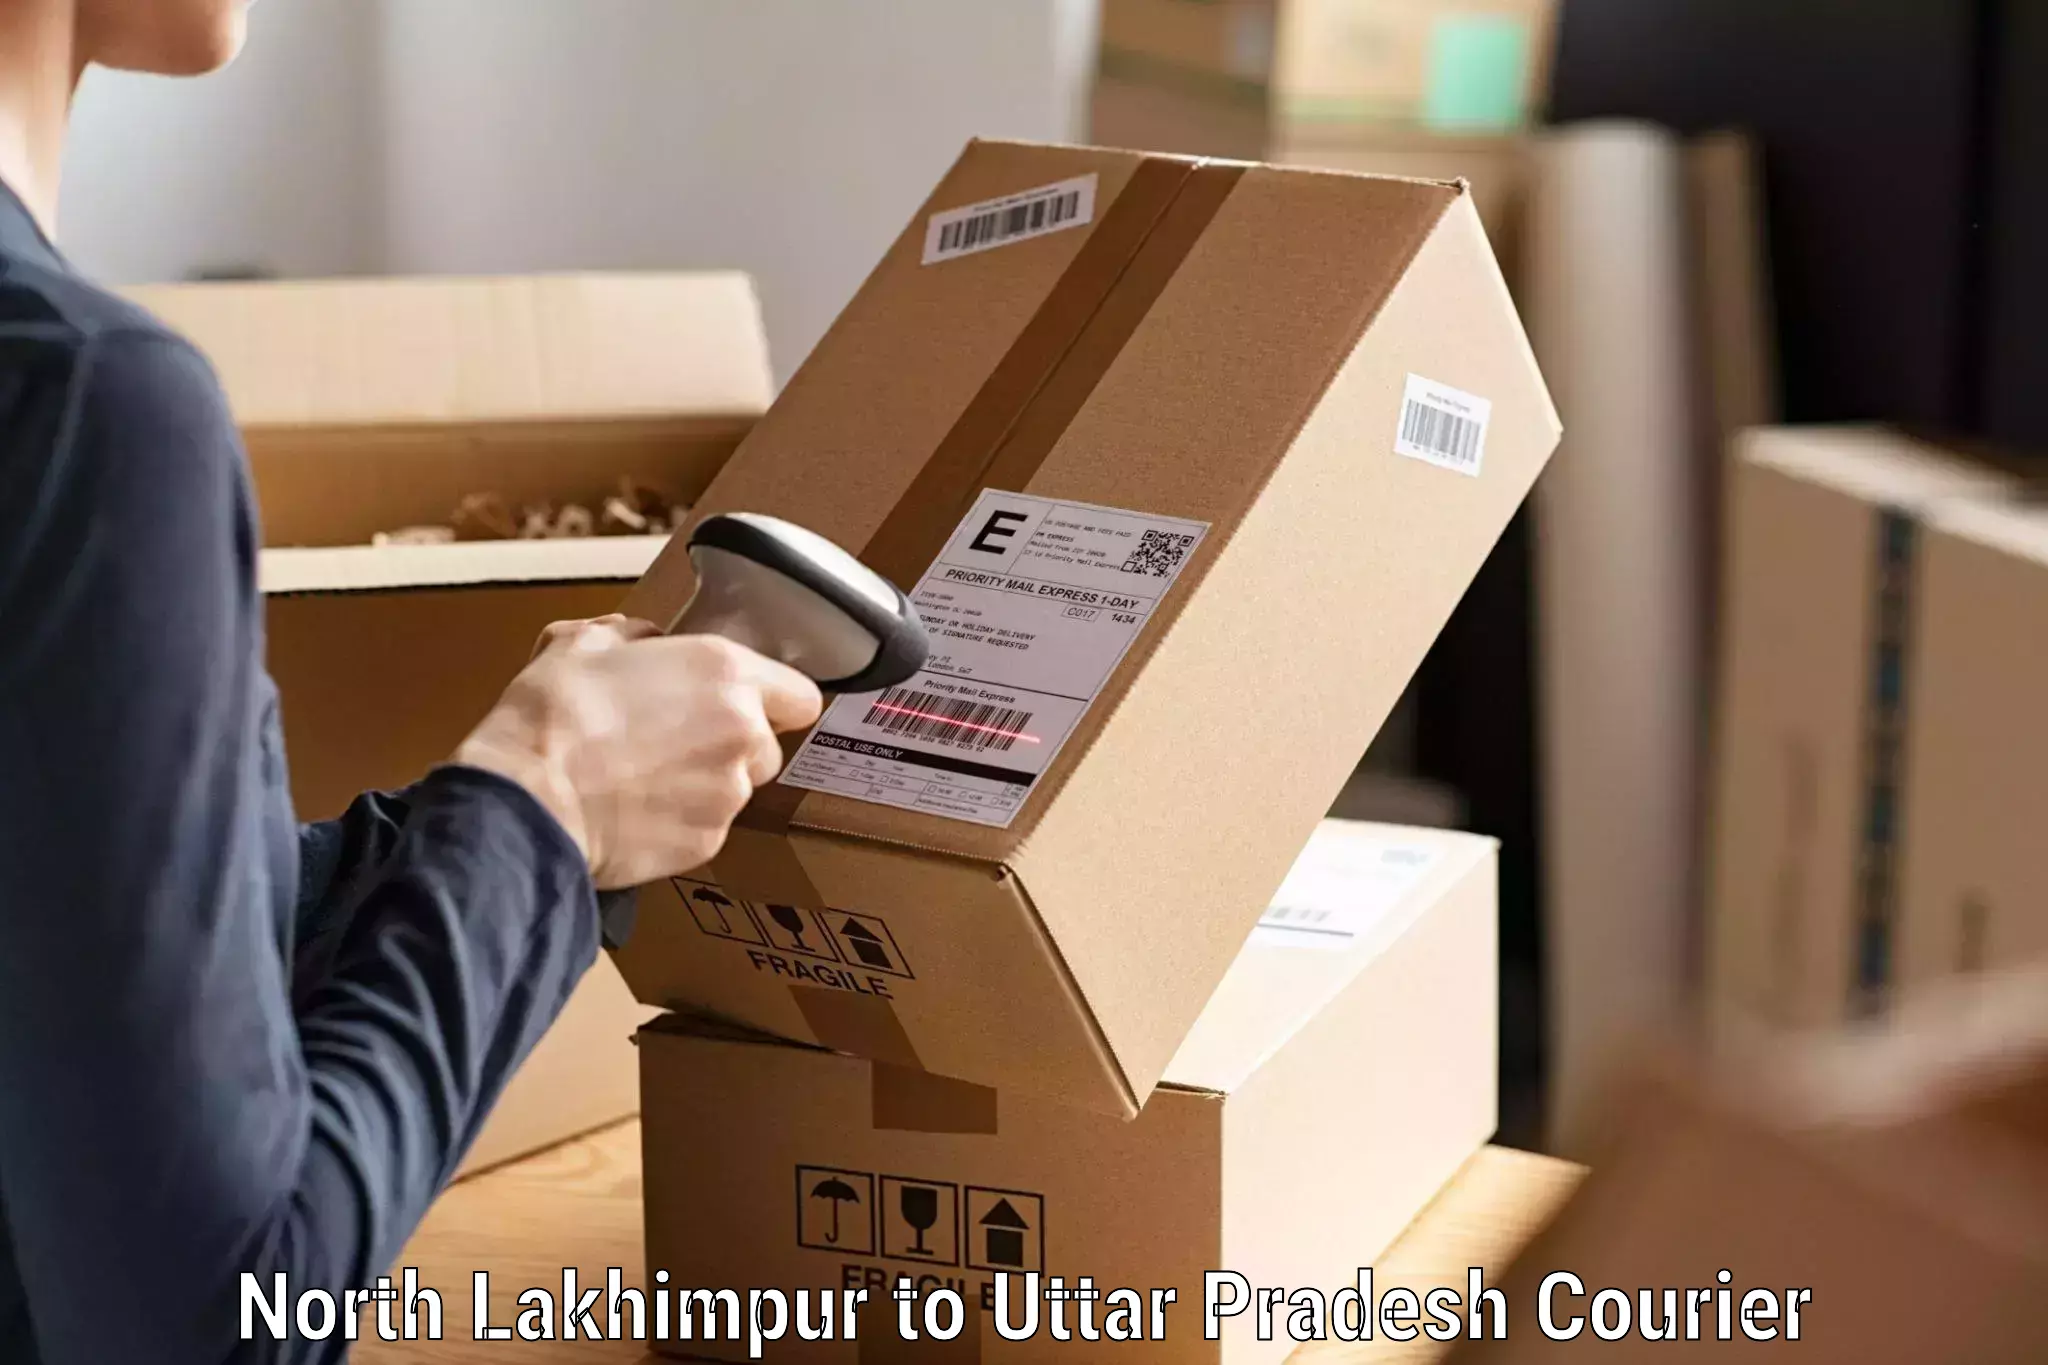 Nationwide delivery network North Lakhimpur to Varanasi